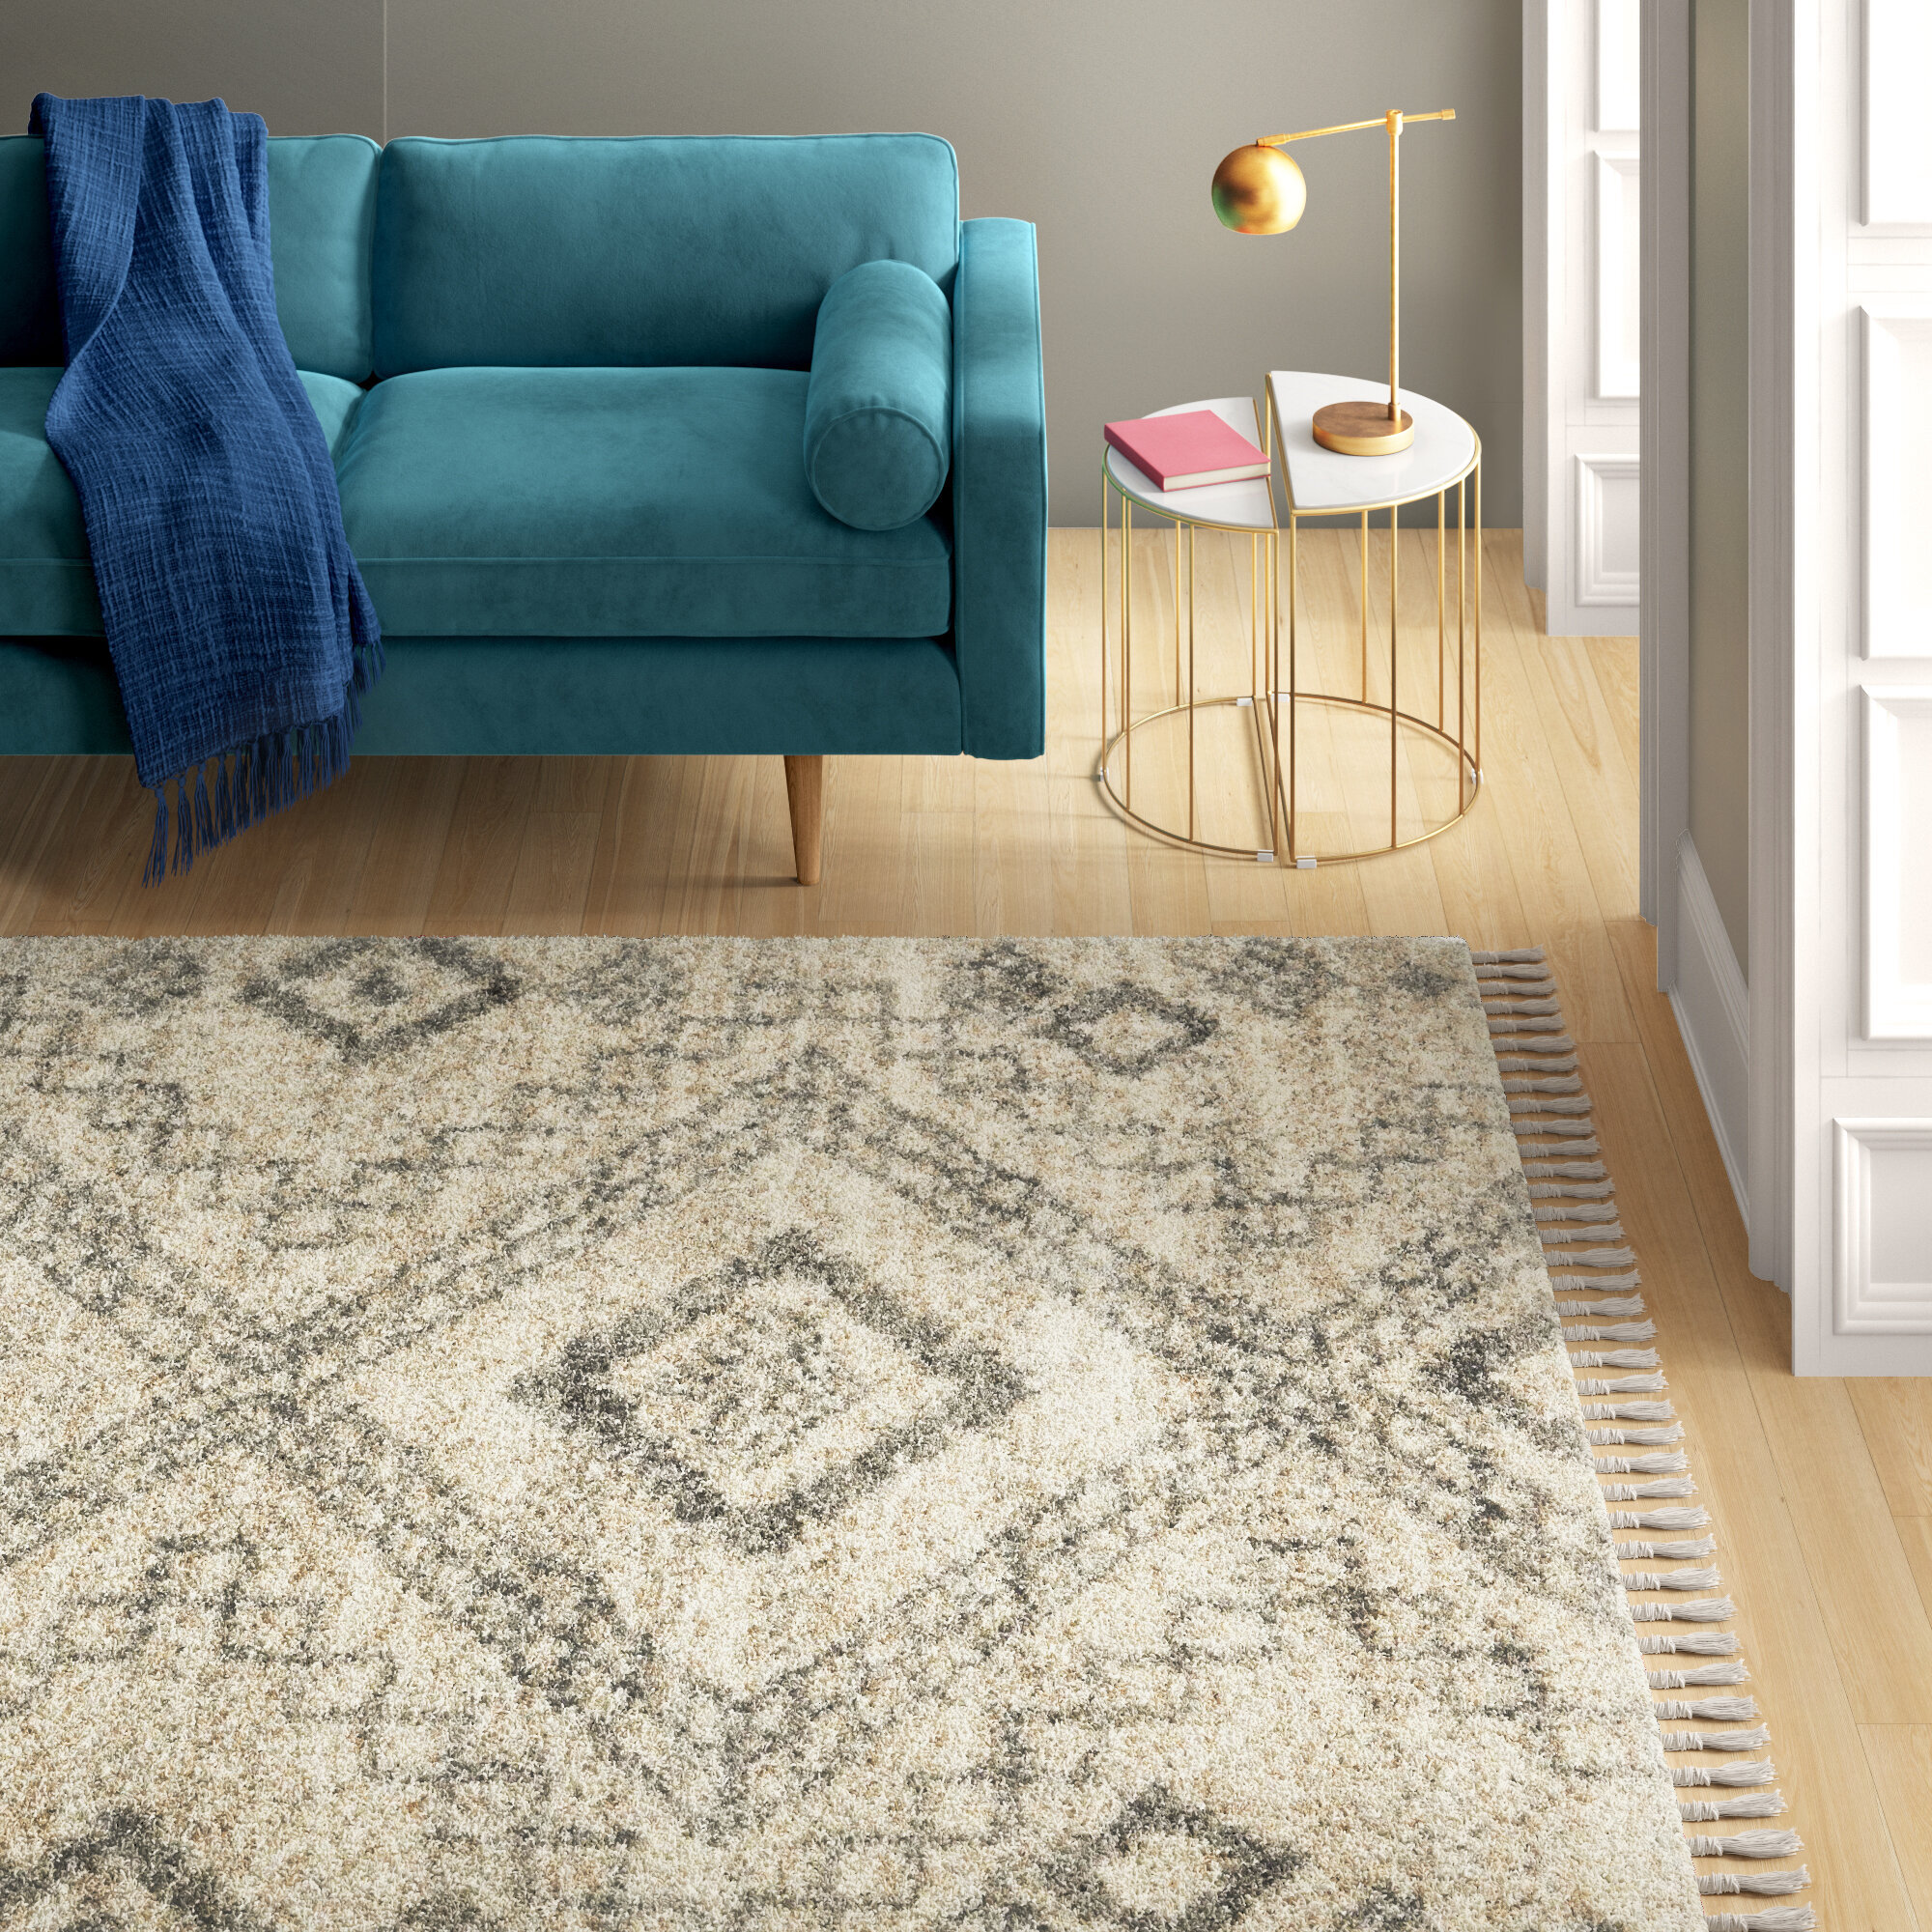 45+ Popular 8x5 shag rug Design